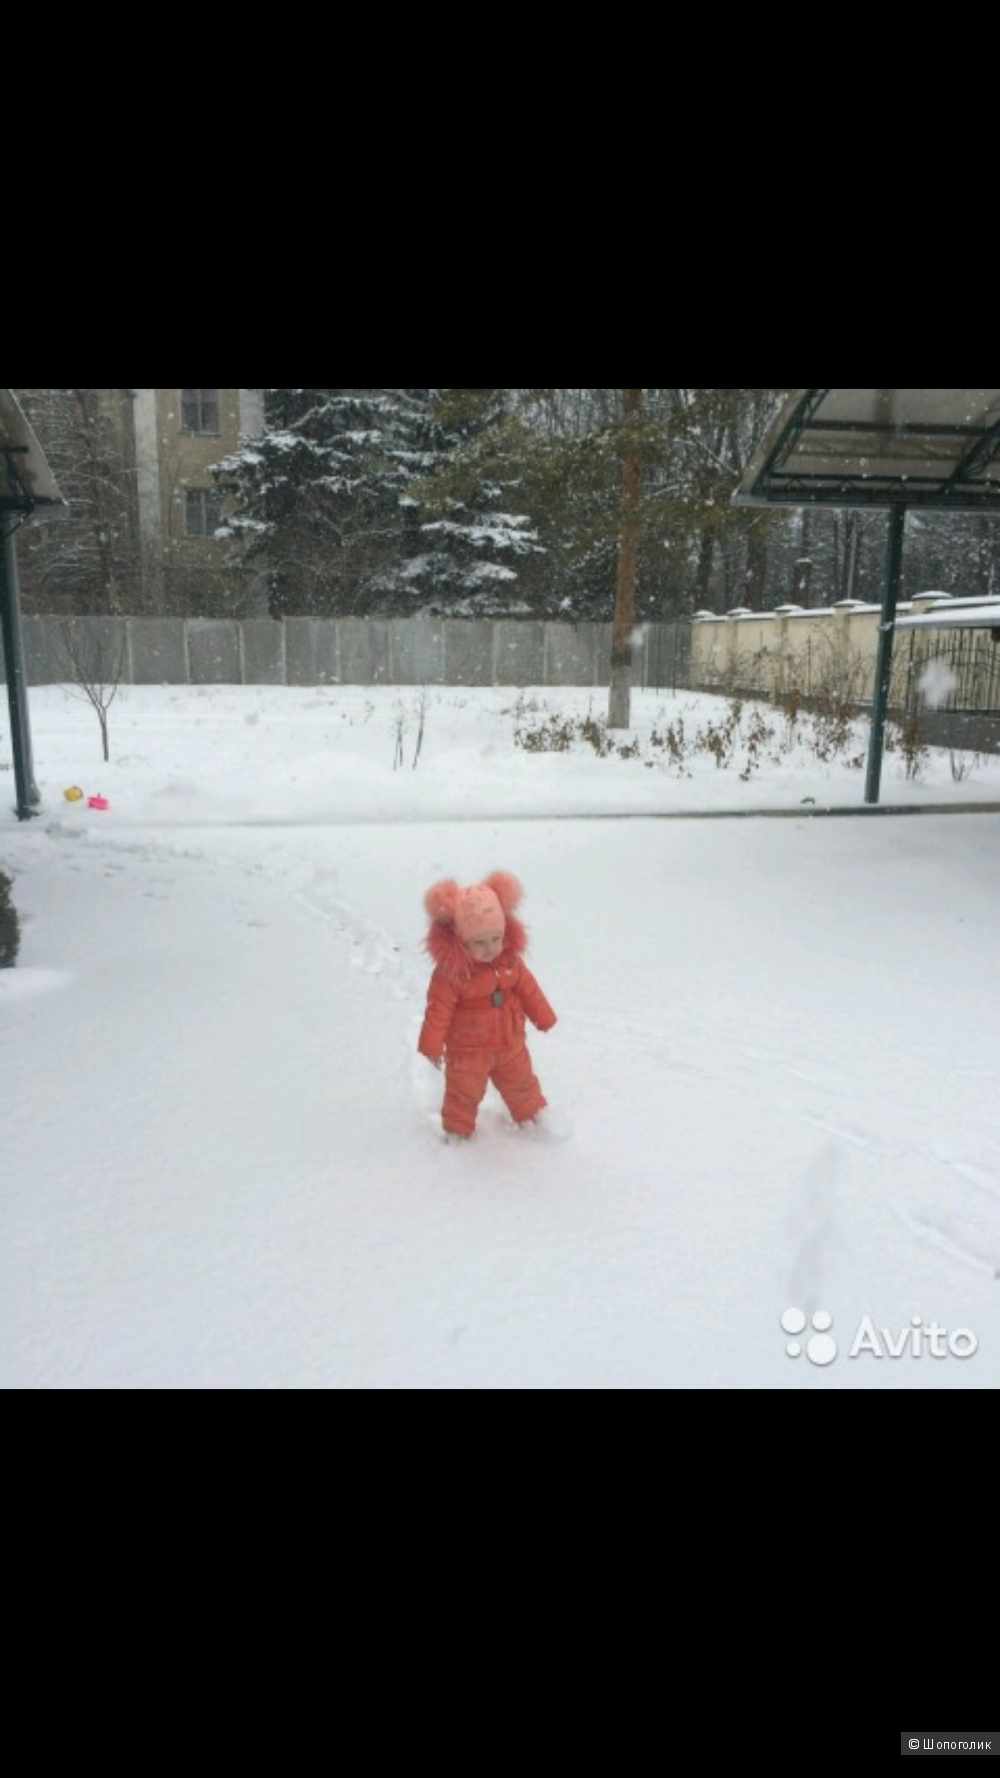 Детский зимний полукомбинезон с курткой бренда alessandro borelli 74см.-80 см.